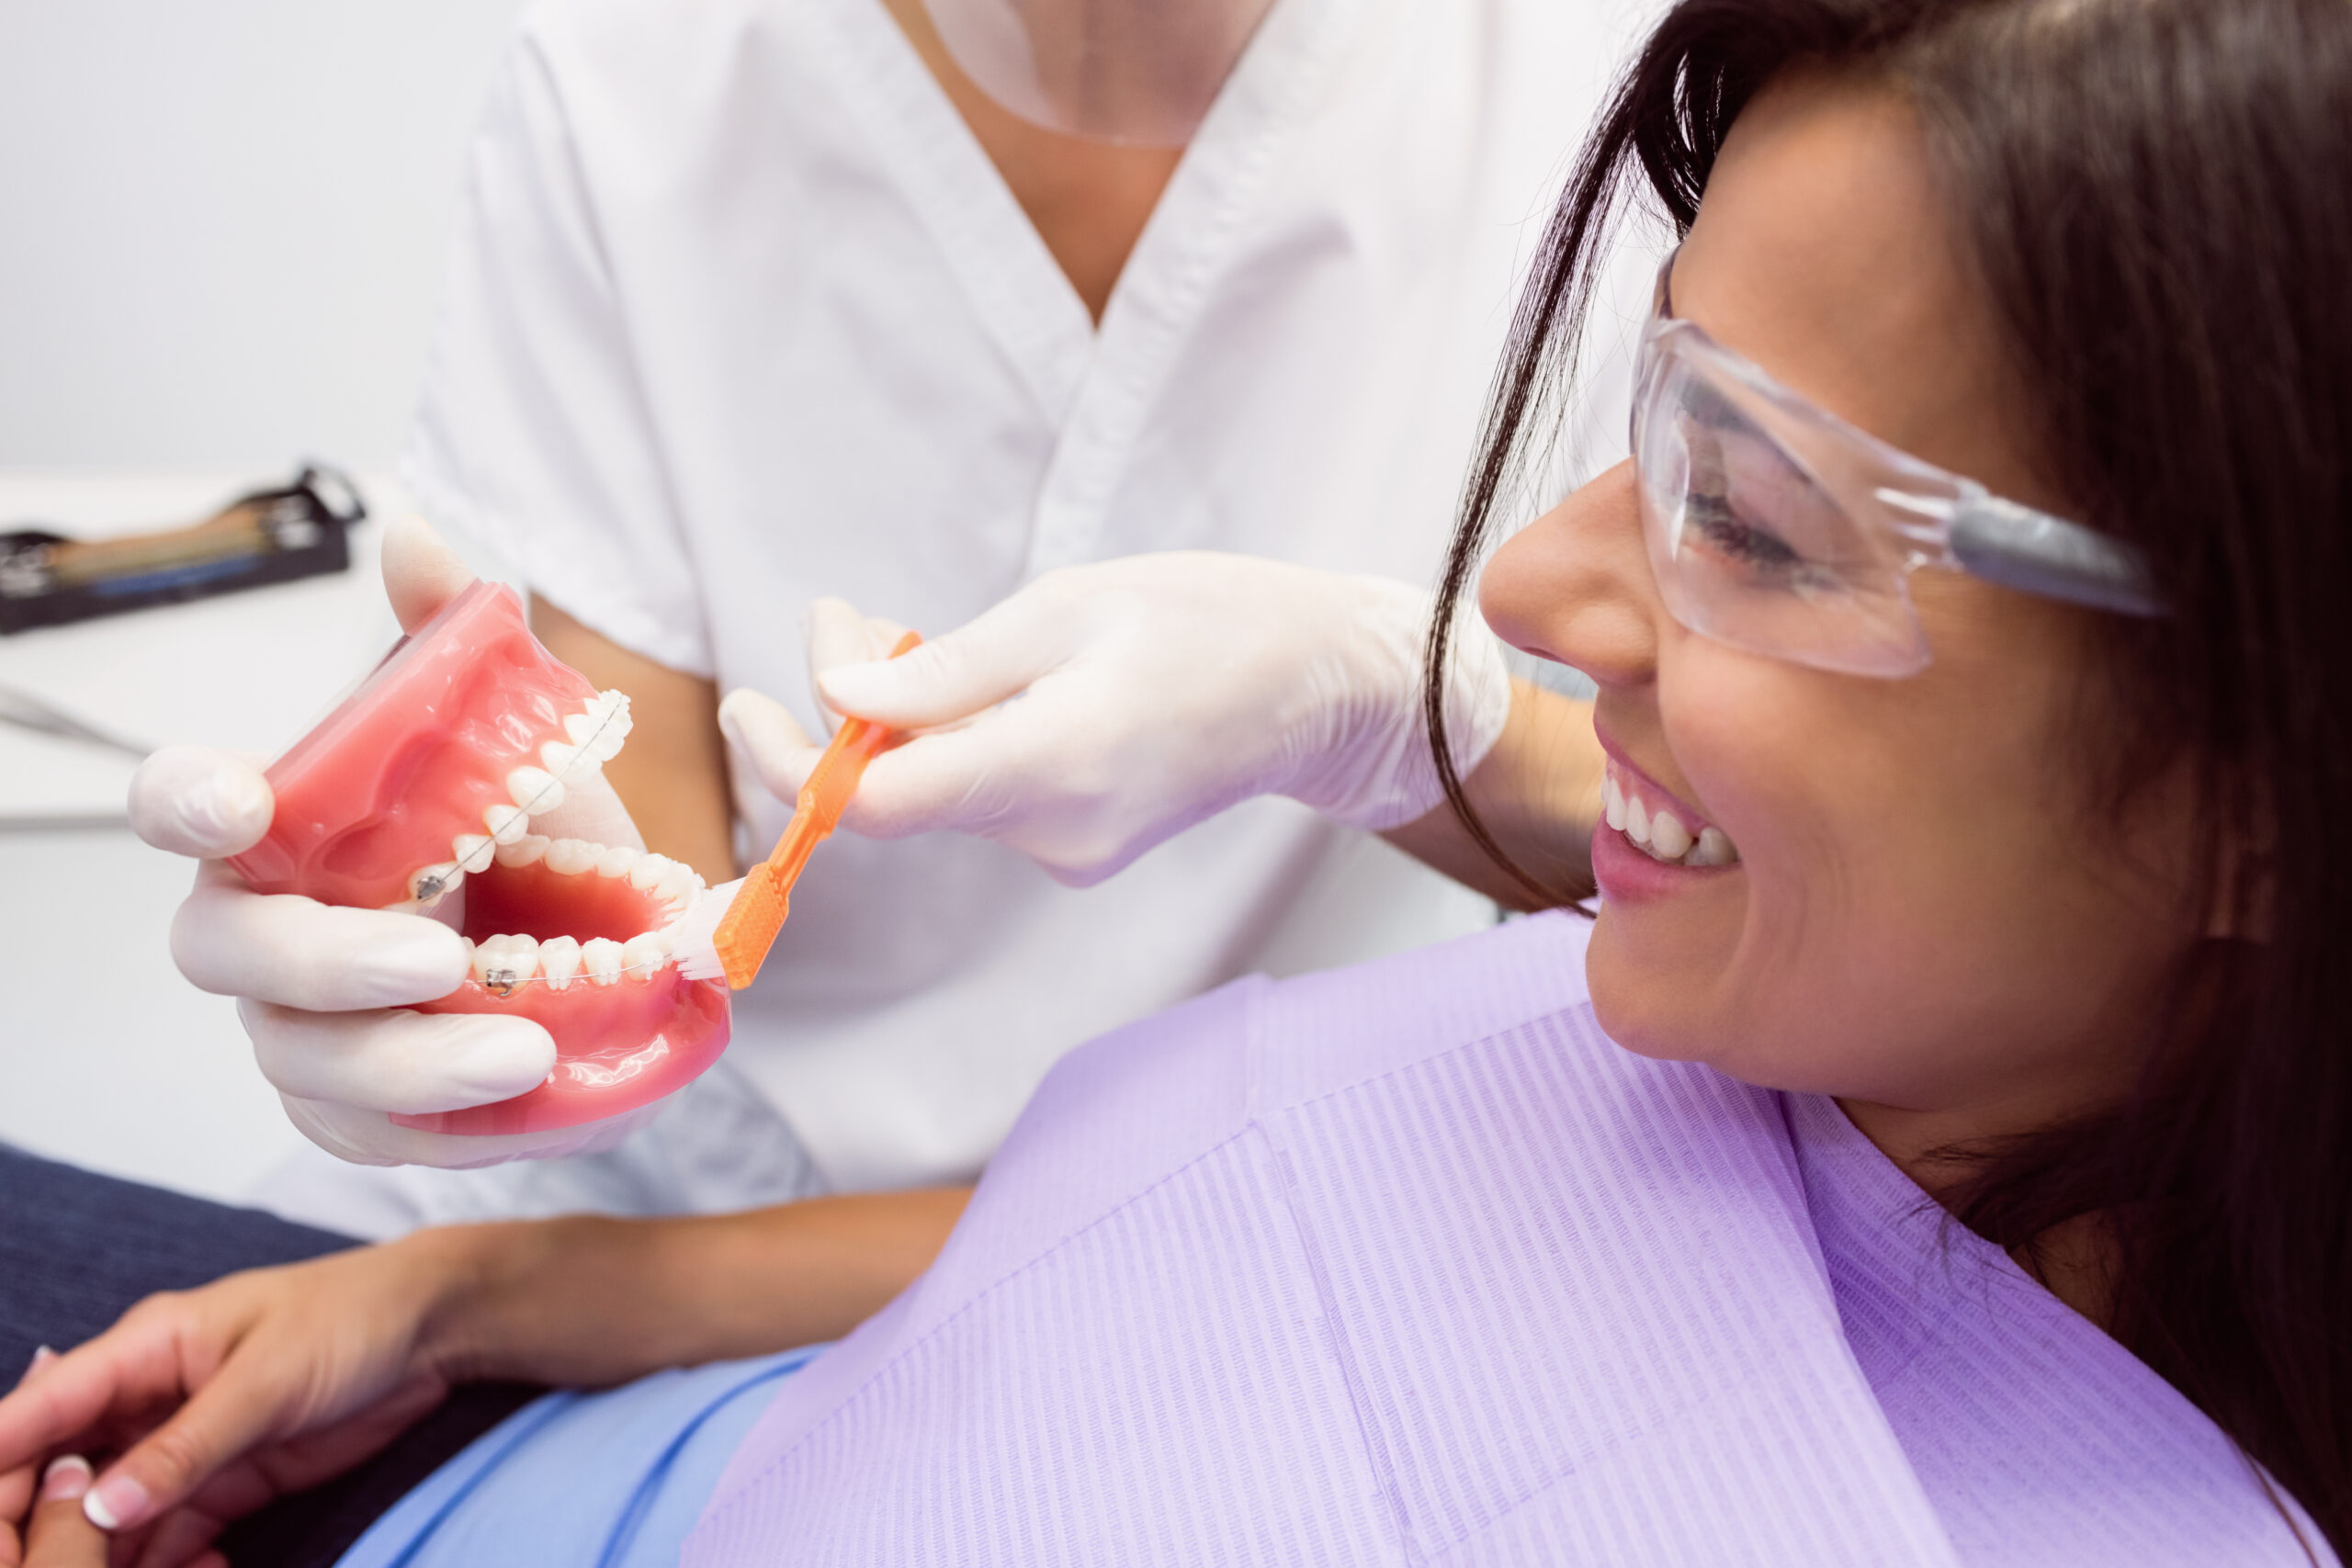 A Dental Hygienist – Your Partner in Oral Health